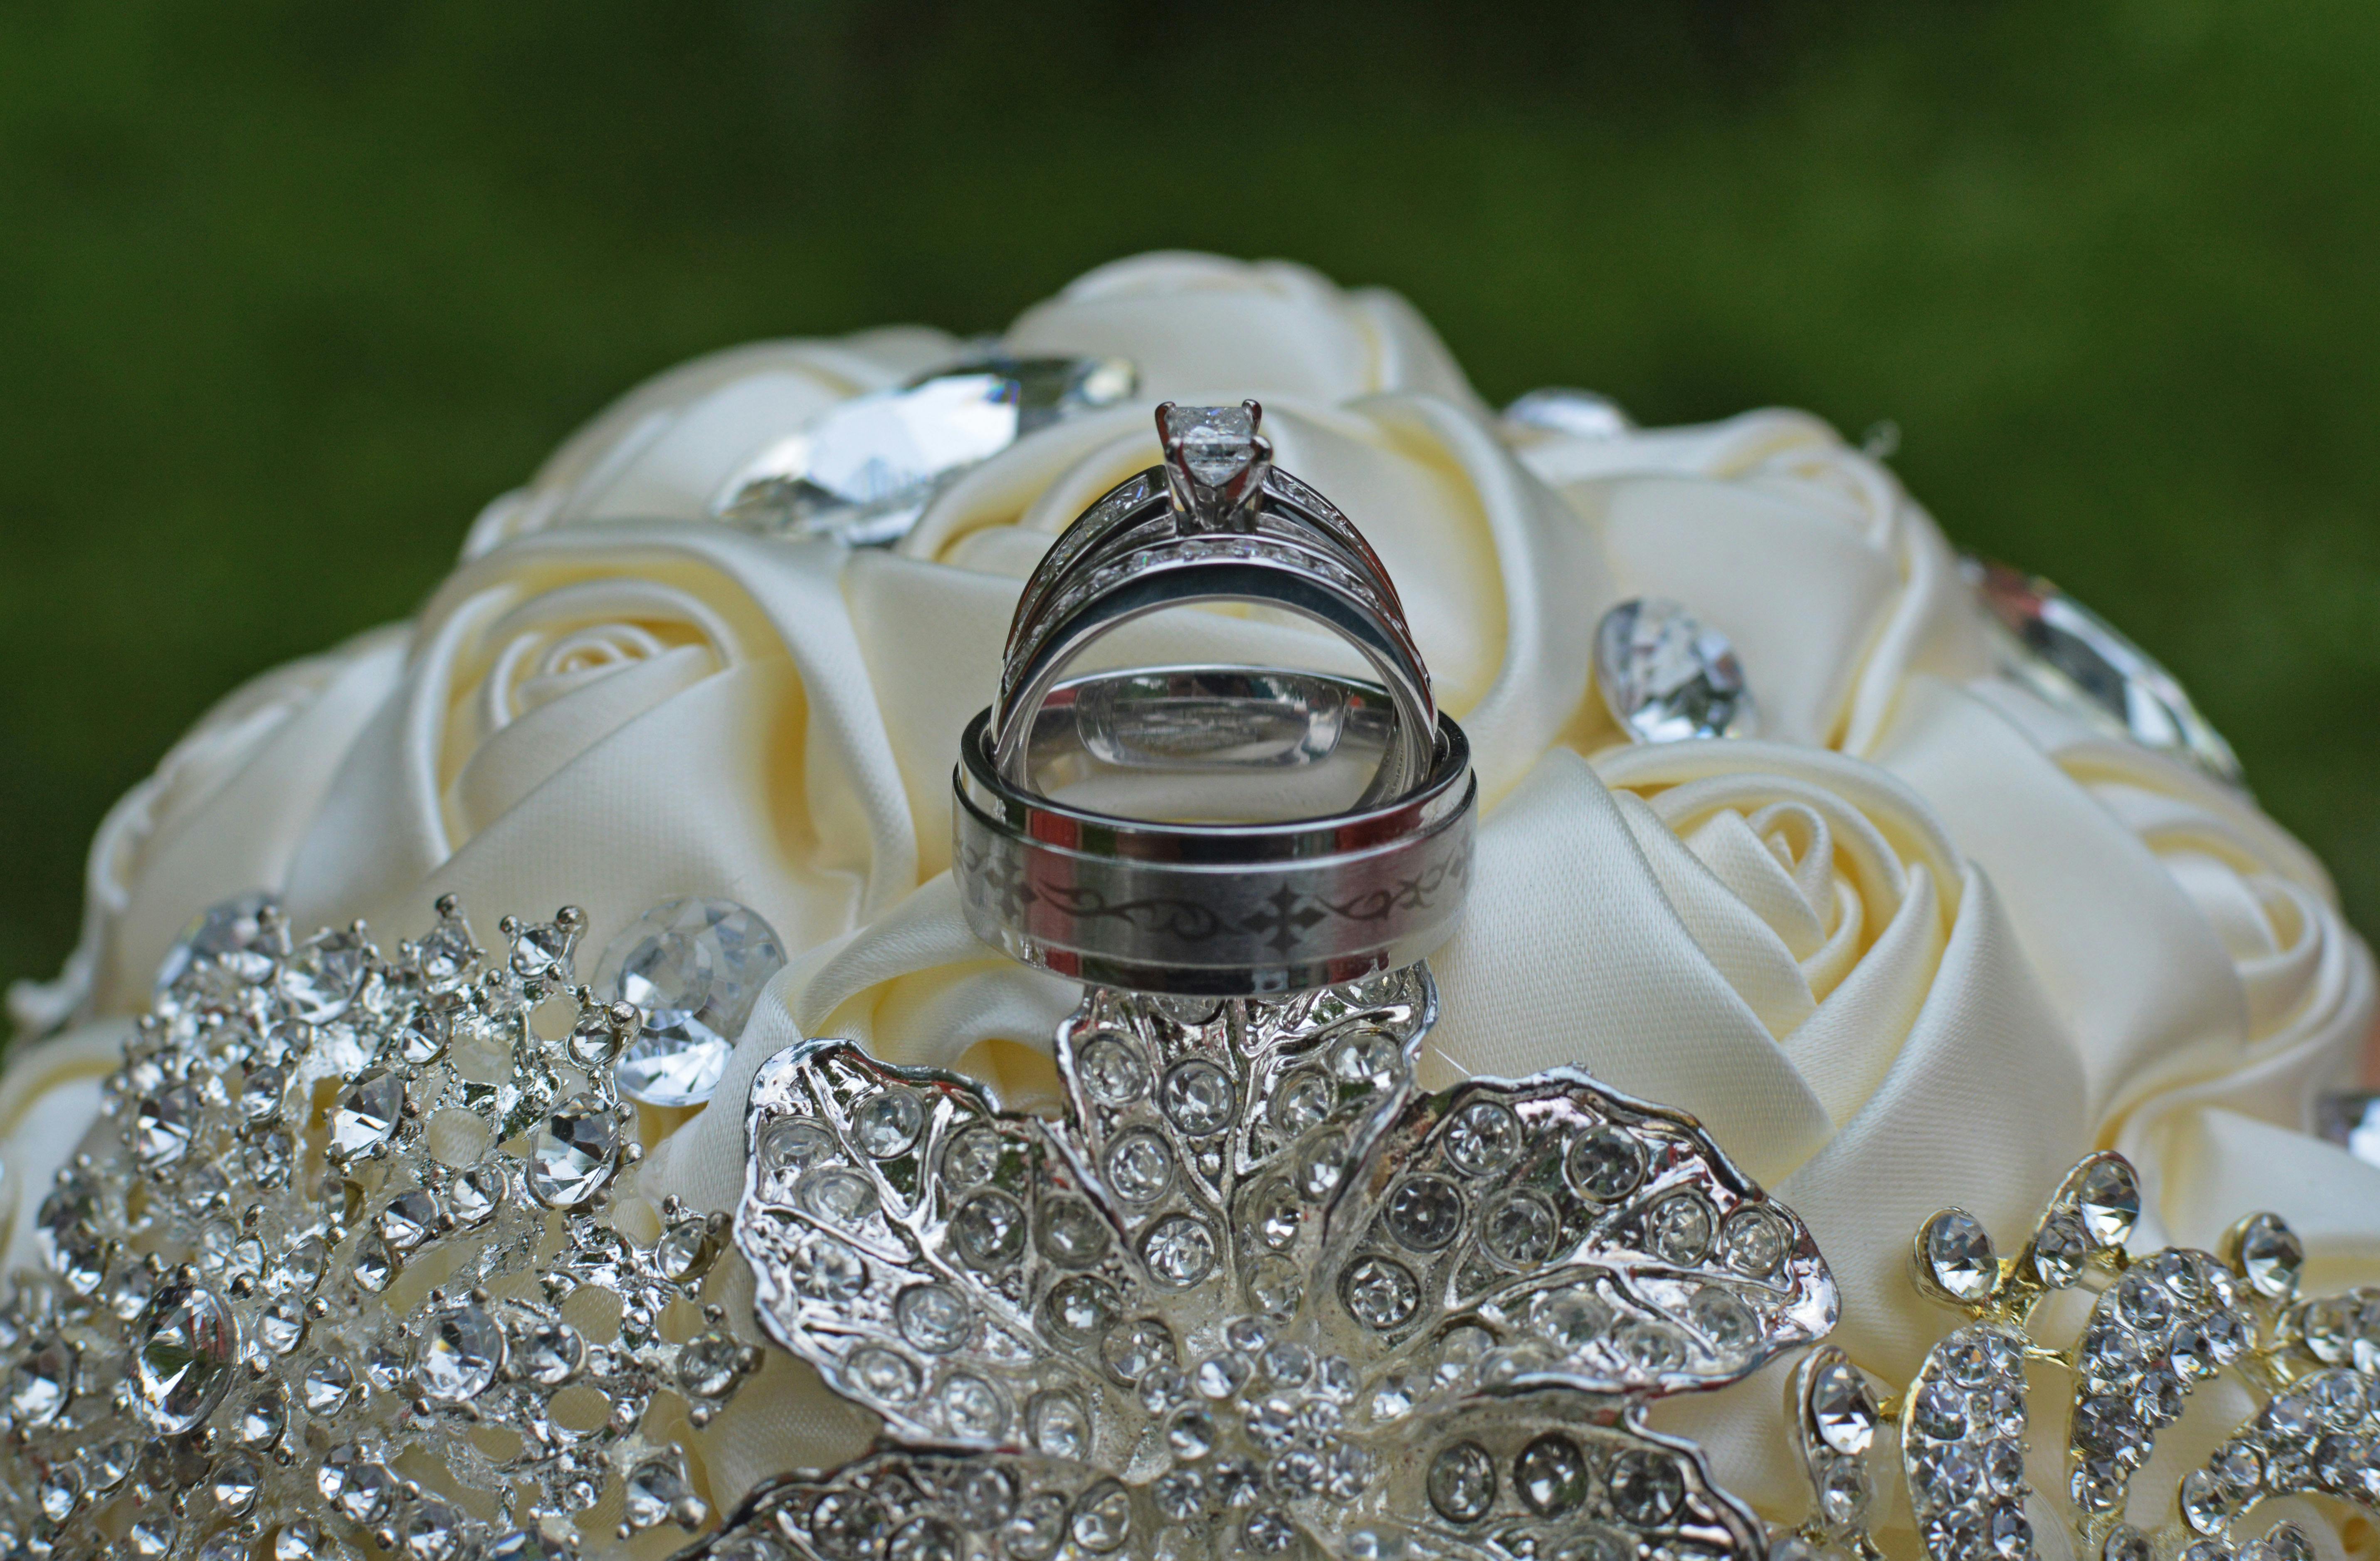 Free stock photo of white silk flowers wedding rings white gold romanc